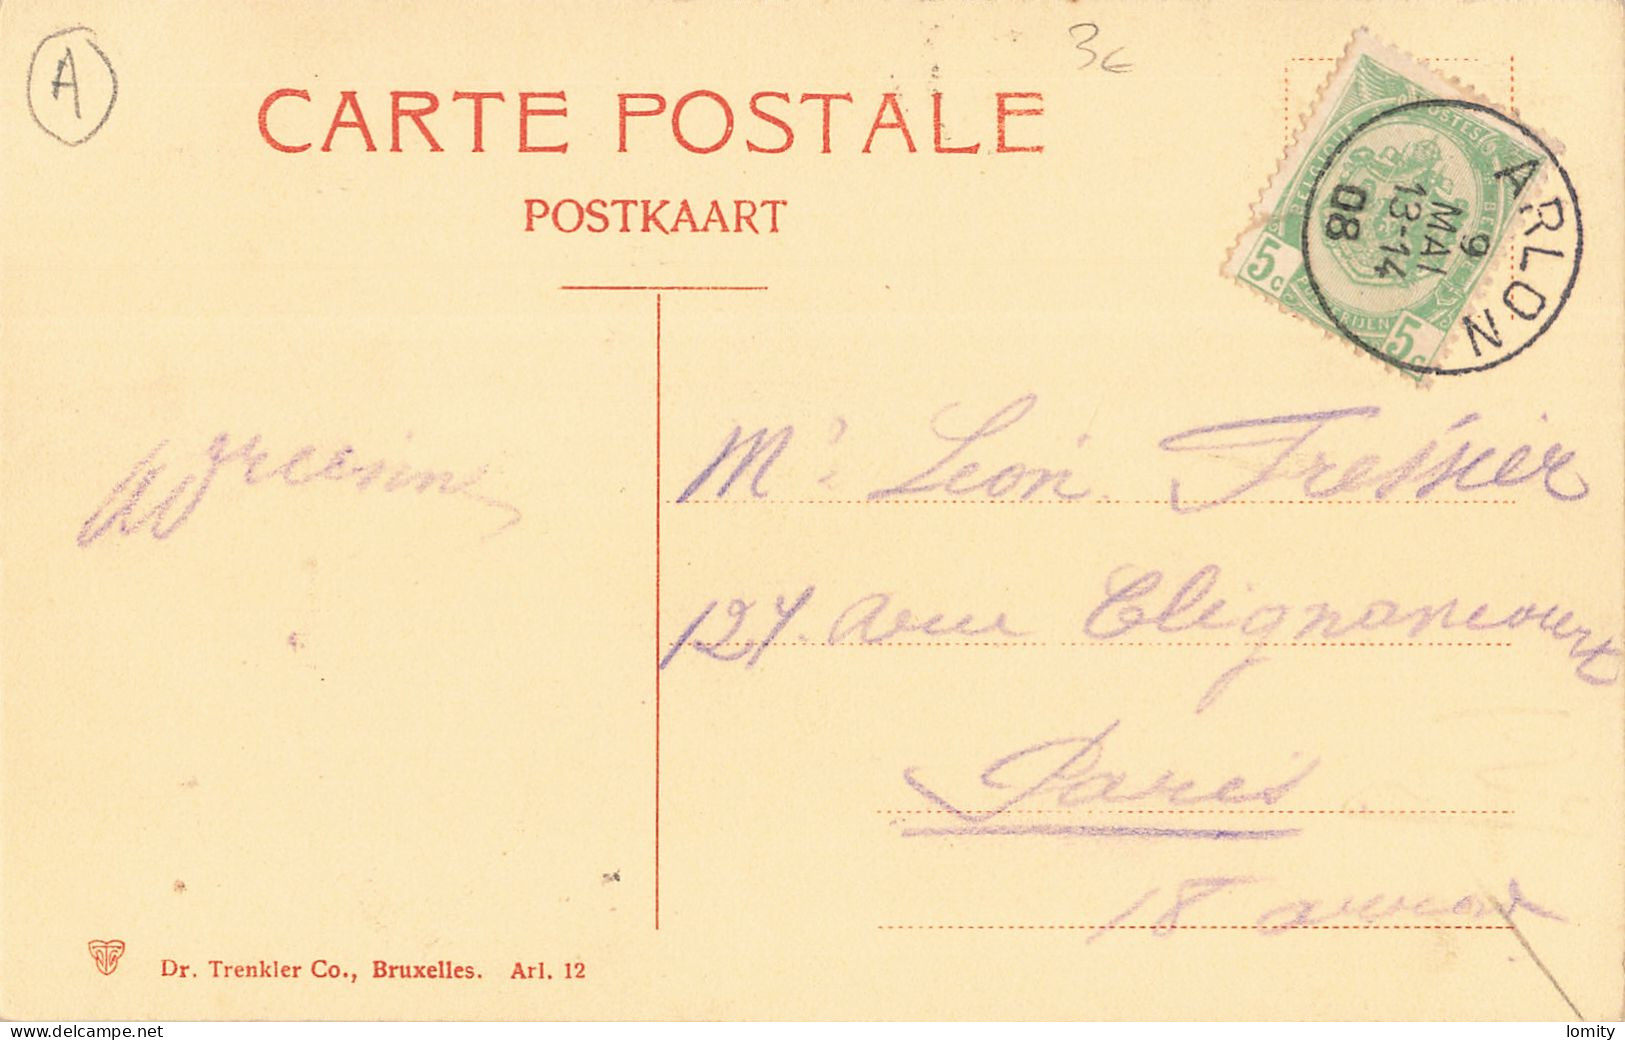 déstockage lot 46 cartes postales CPA Belgique Blankenberghe Arlon Namur Dinant Liege Gand Ostende Bruxelles